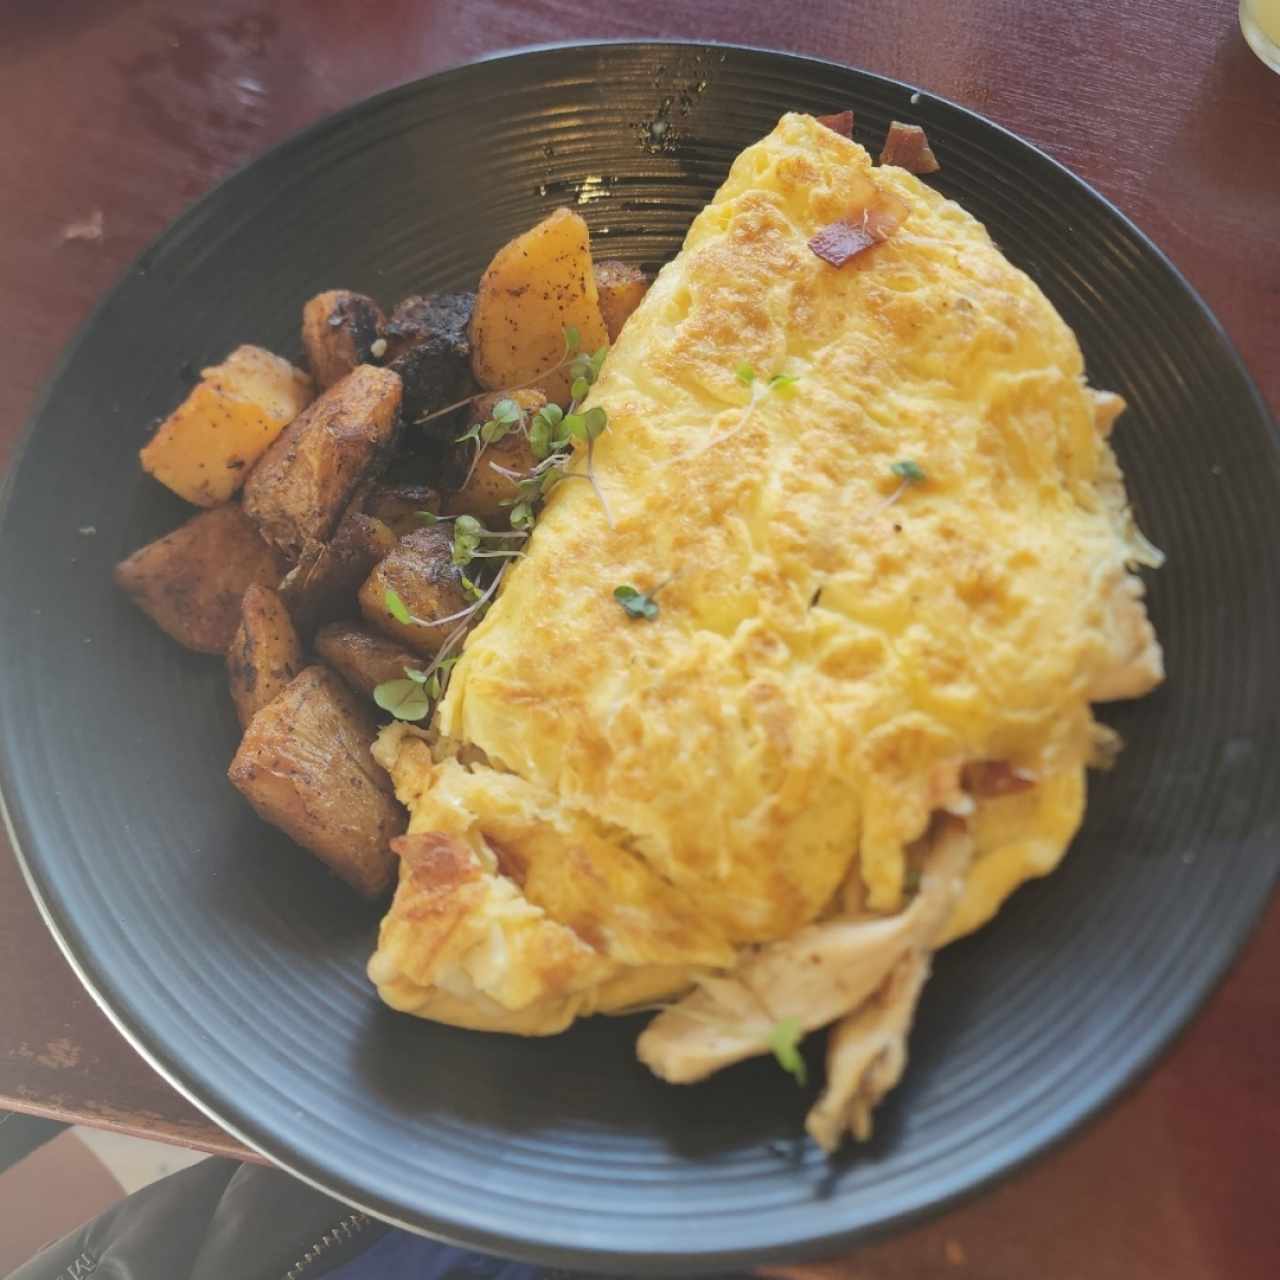 omelet personalizado